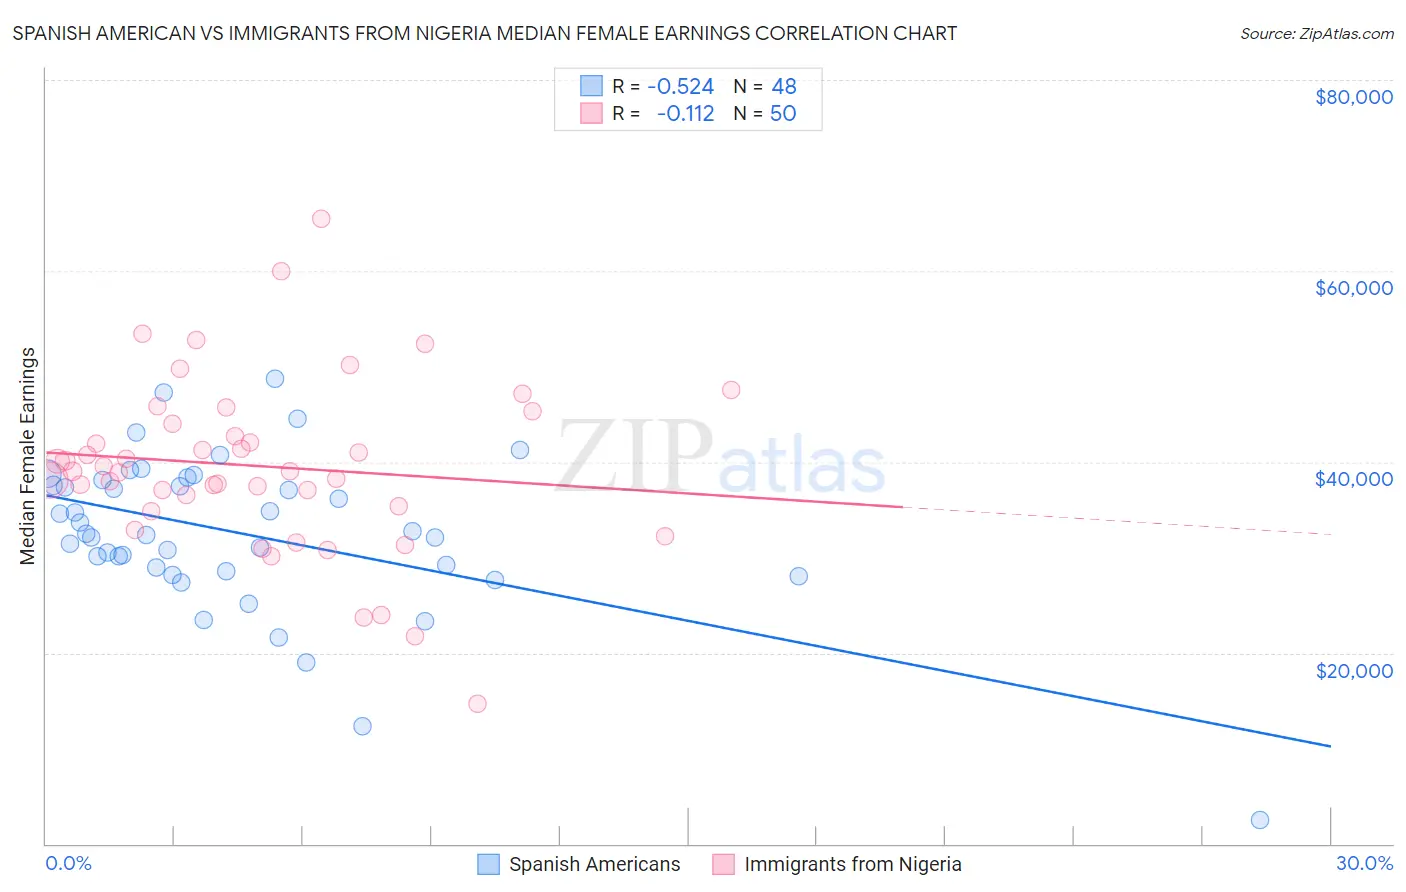 Spanish American vs Immigrants from Nigeria Median Female Earnings